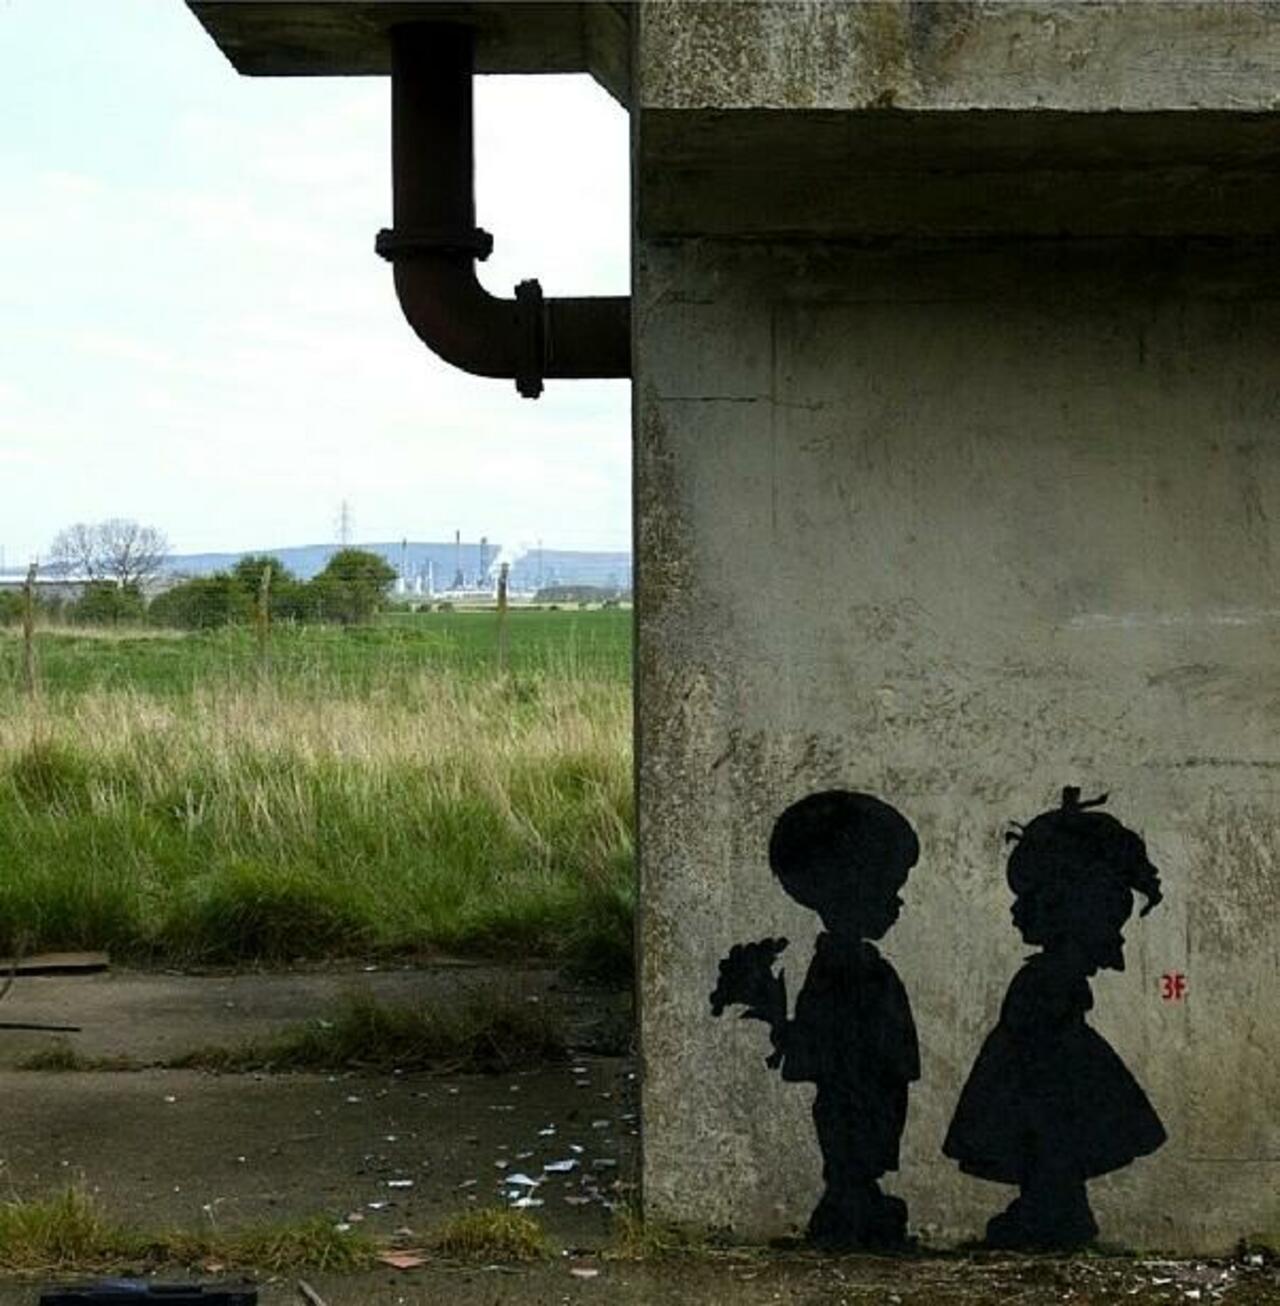 Found love in a hopeless place!

Street Art by 3fountains 

#art #mural #graffiti #streetart http://t.co/kYlvbn60v4